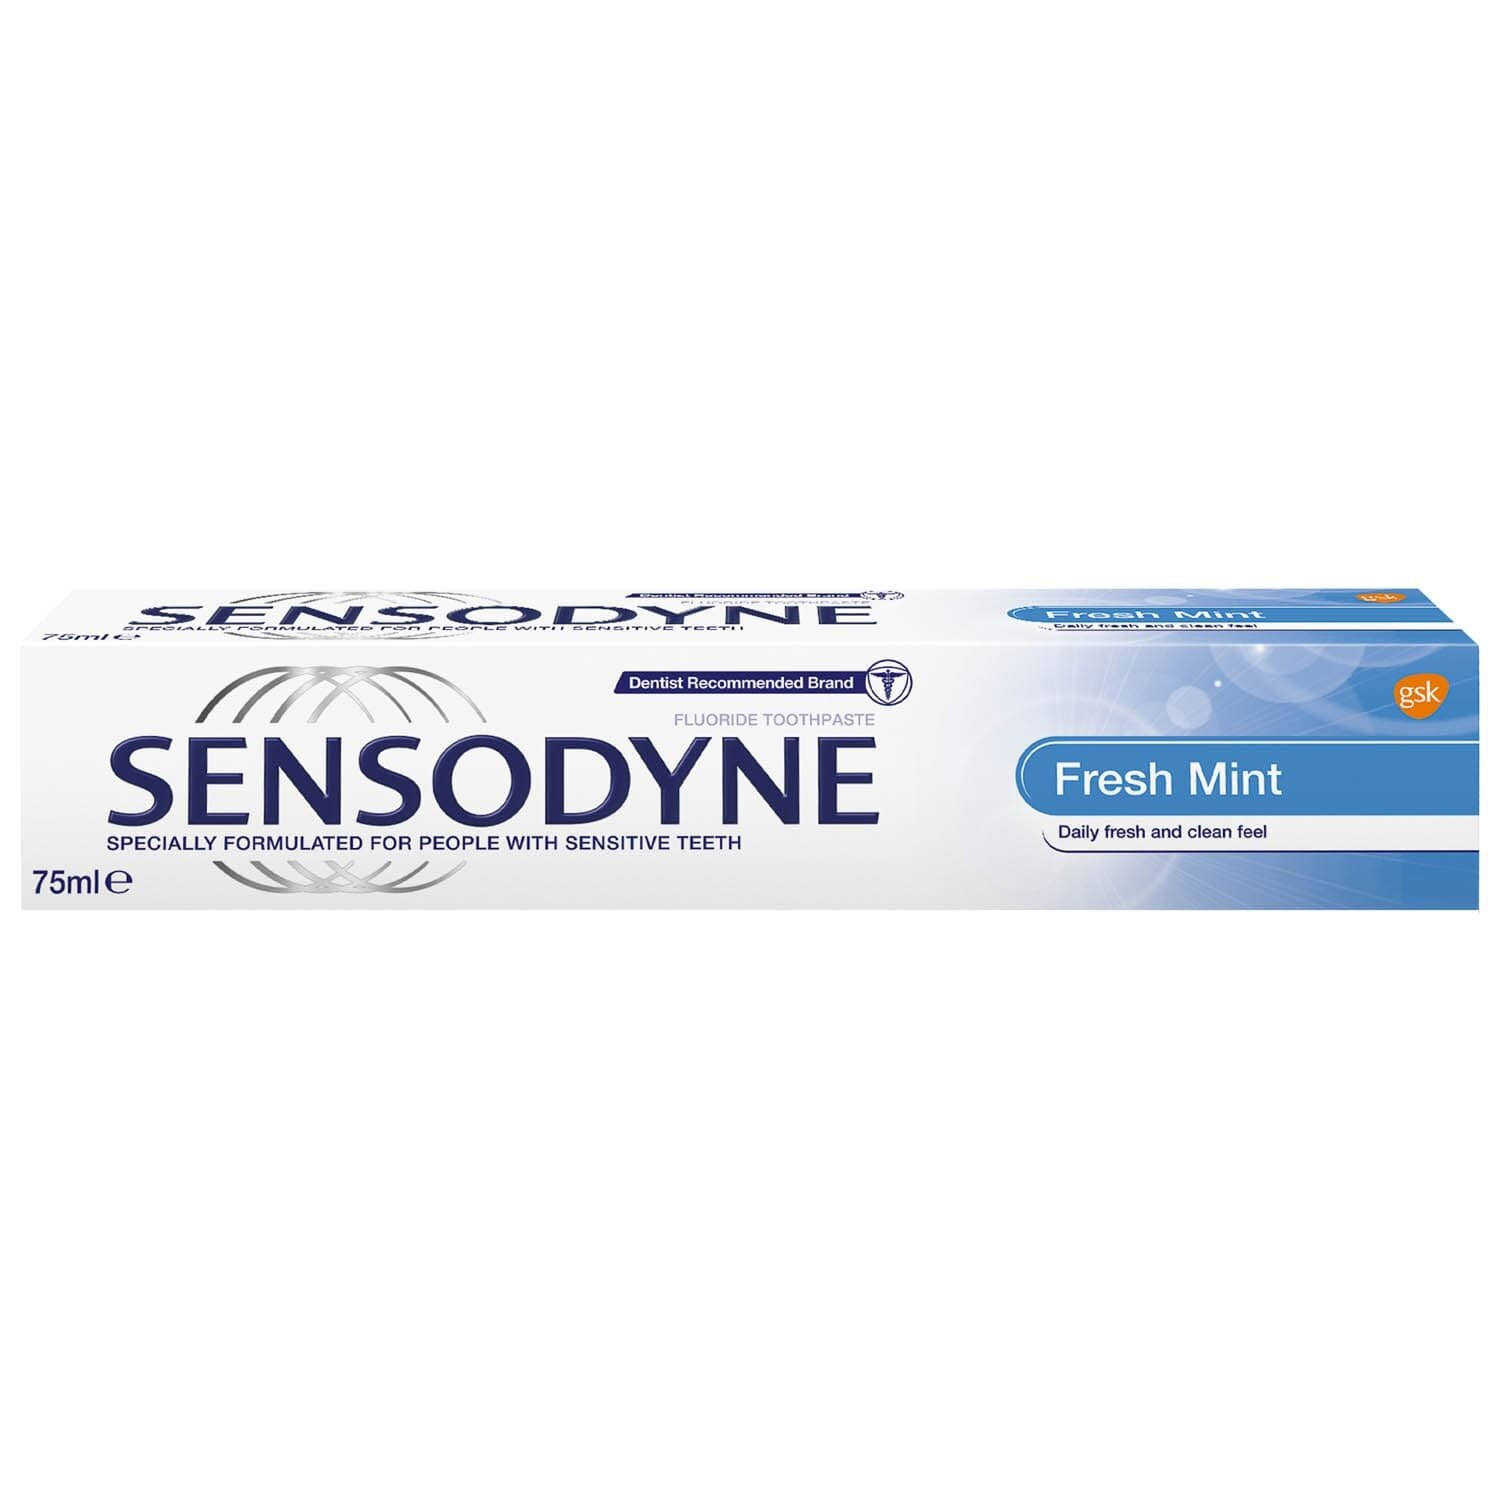 Sensodyne Toothpaste - Fresh Mint, 75ml